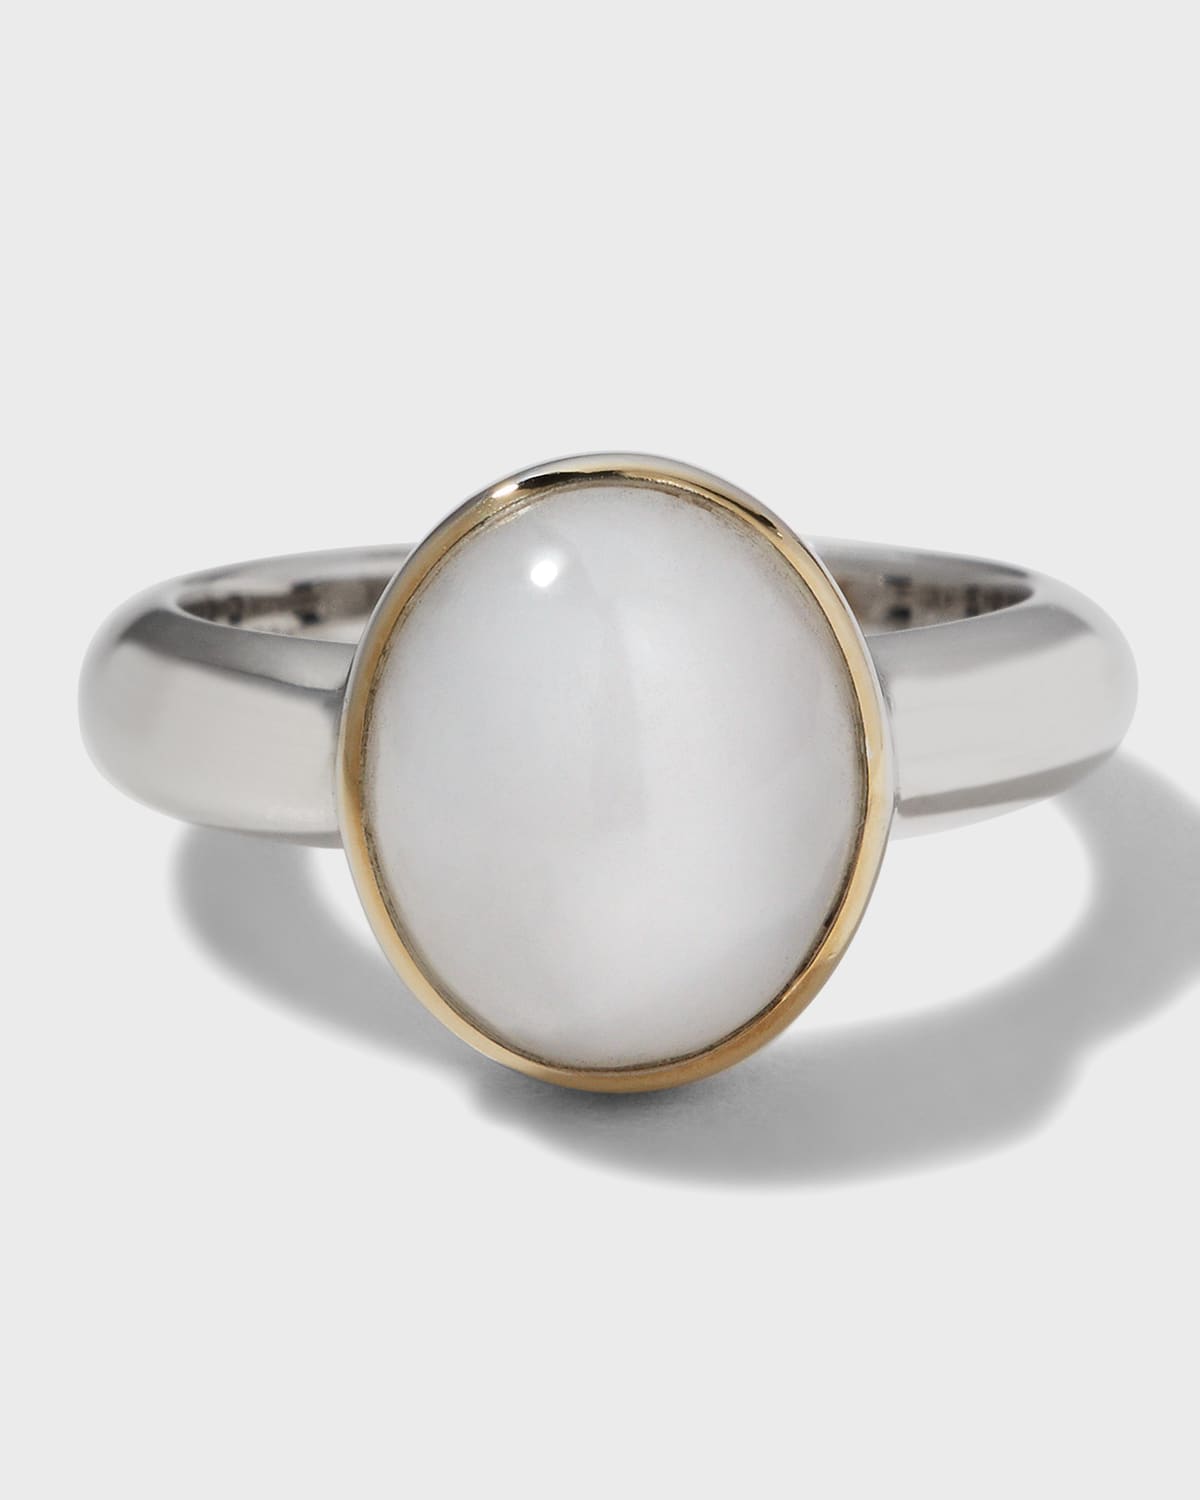 David C.A. Lin 18k White Gold Oval White Jadeite Ring, Size 6.5